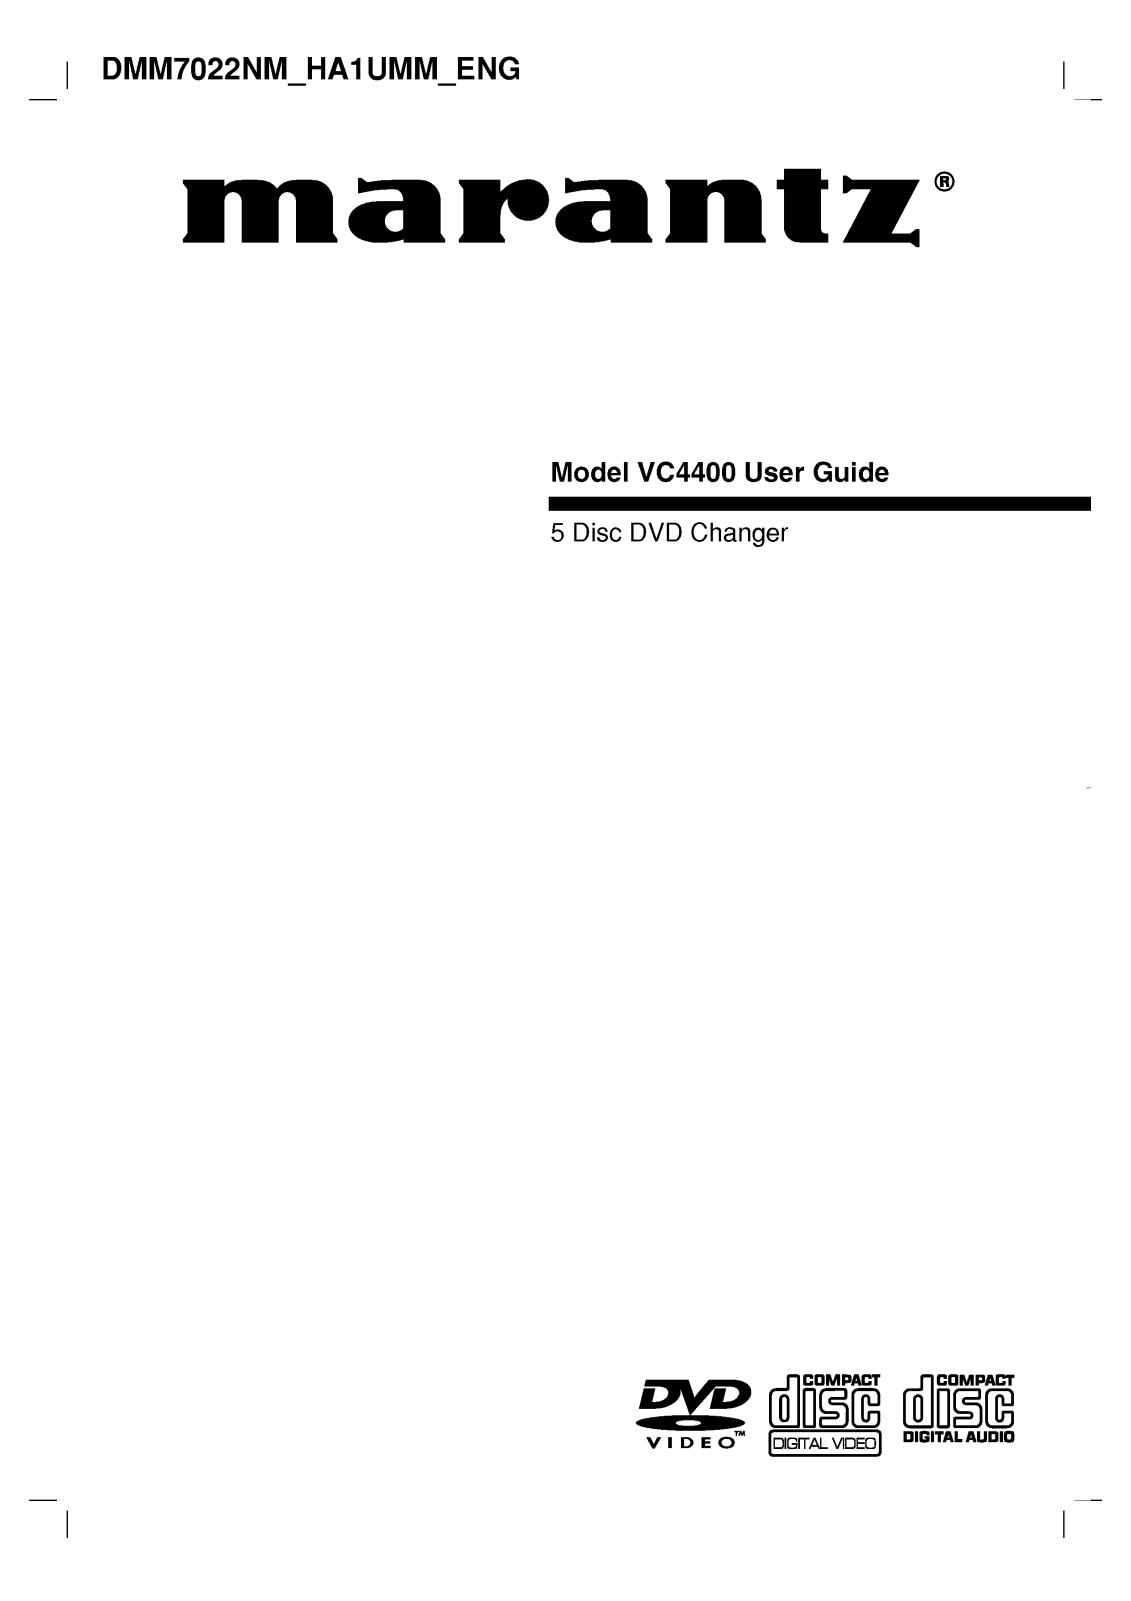 LG VC4400 User Manual